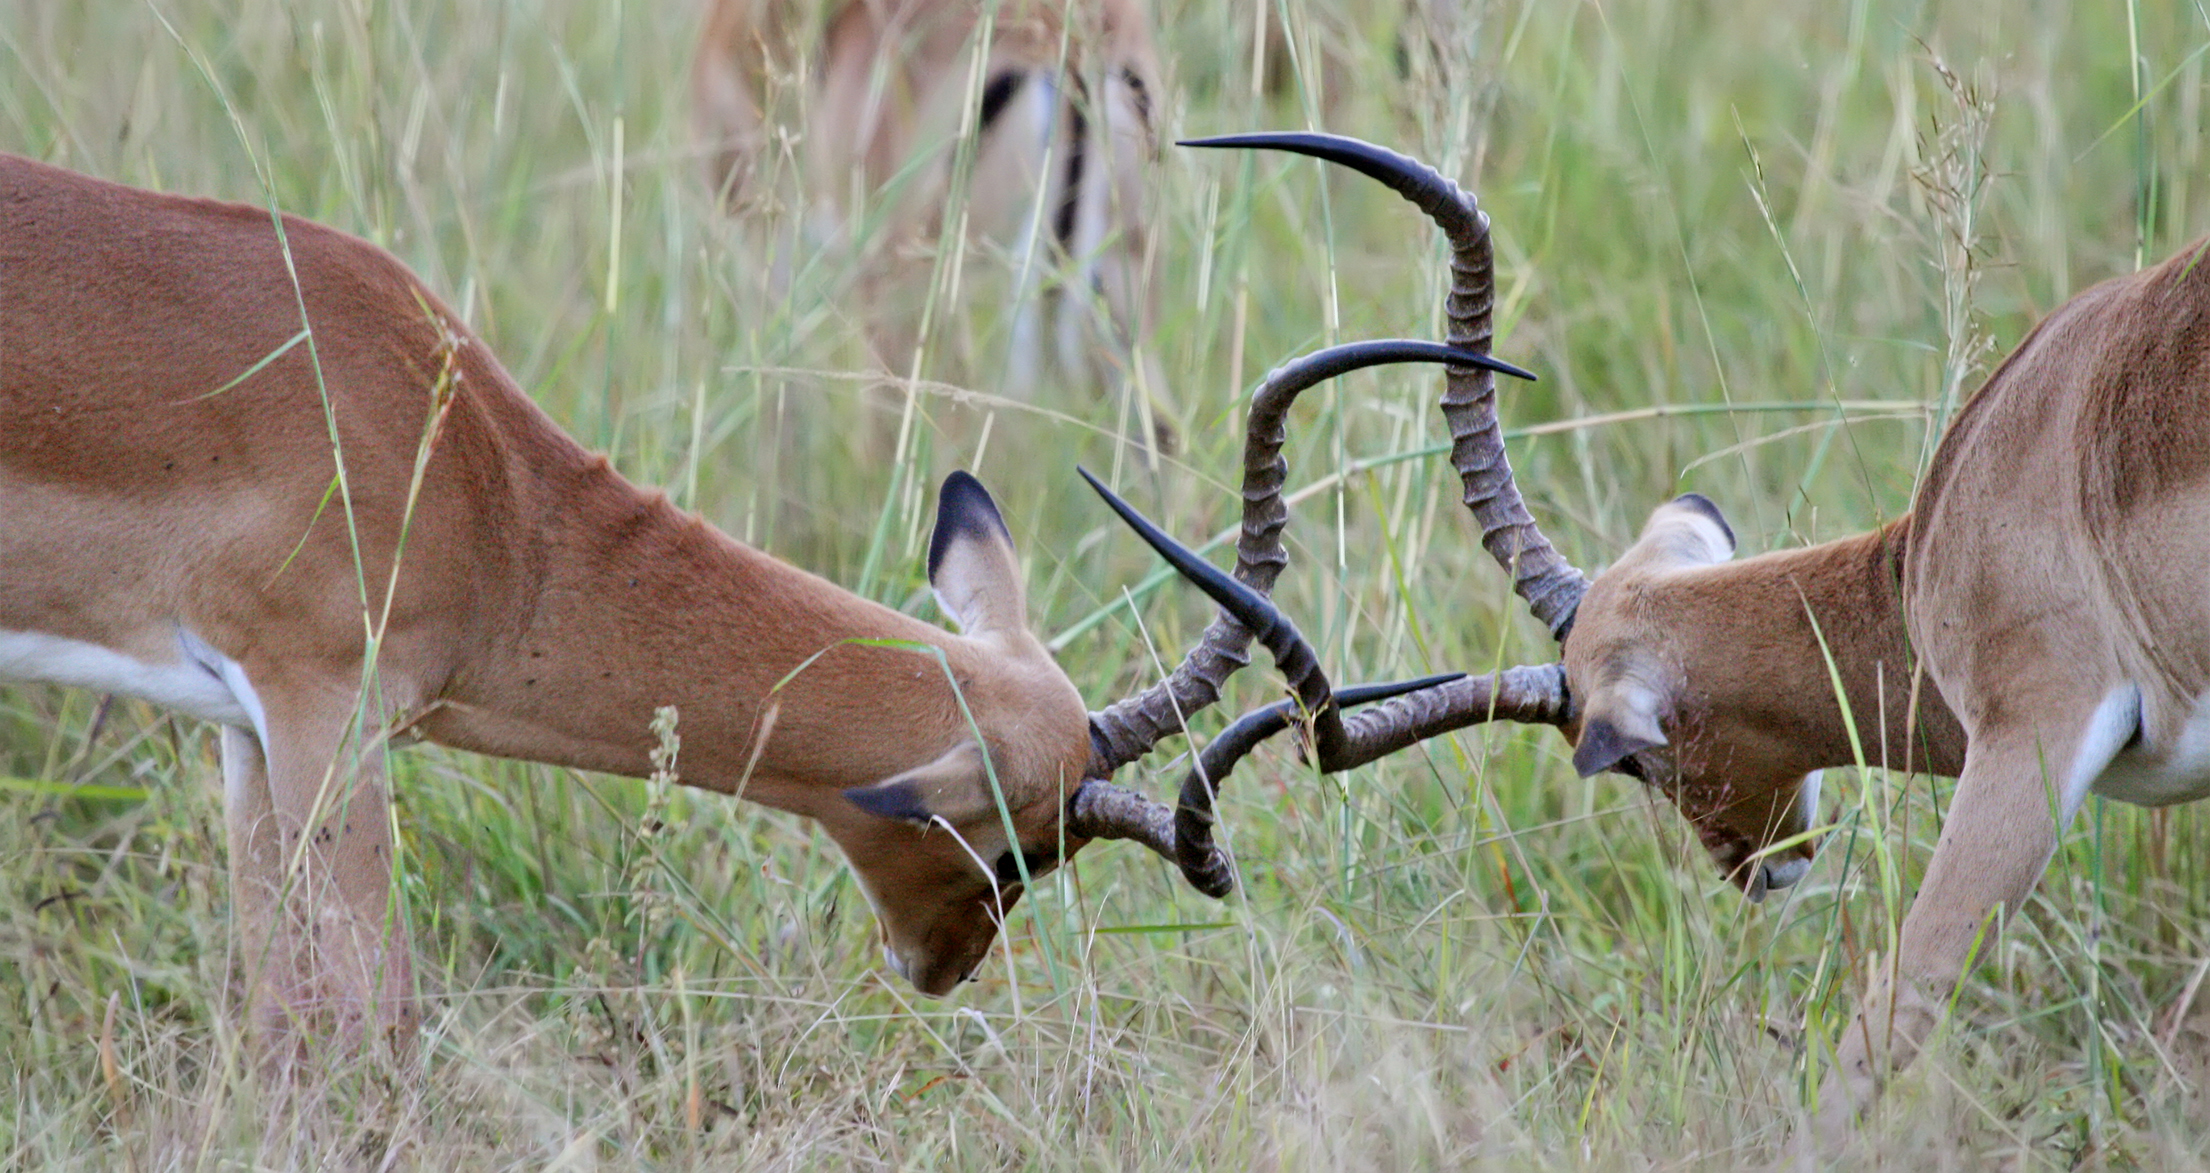 File:Fighting impalas edit2.jpg - Wikipedia